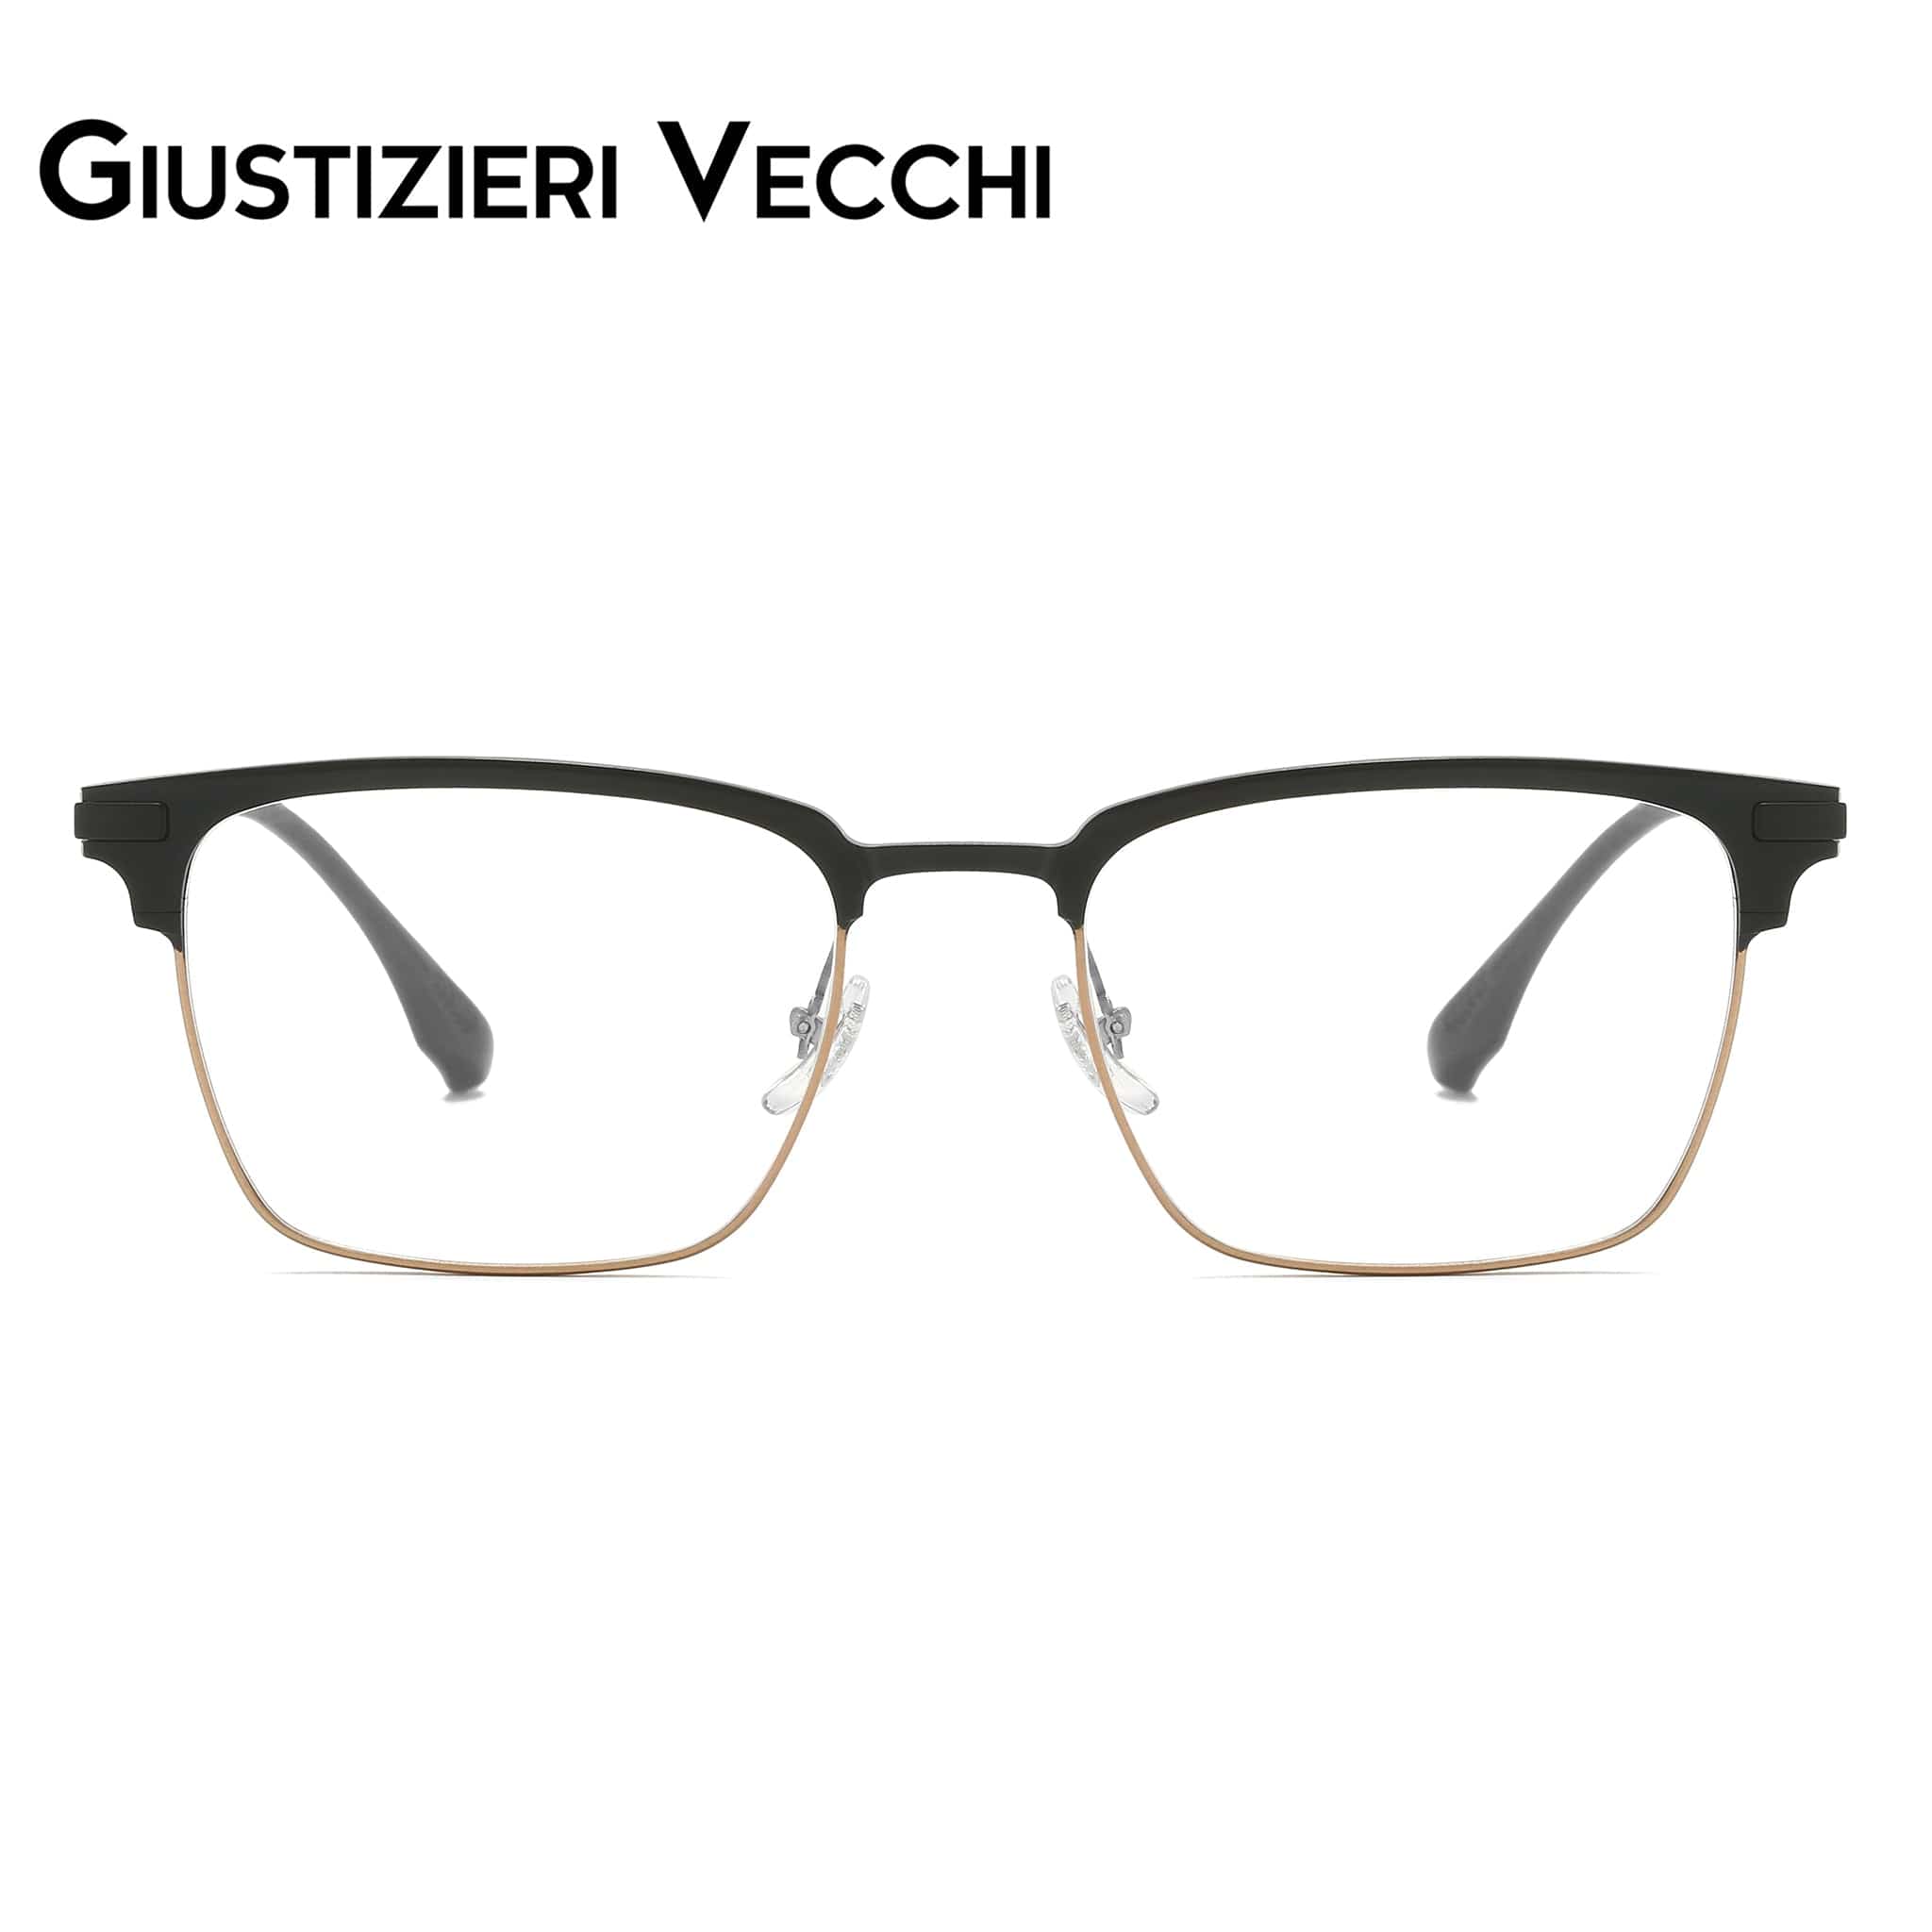 GIUSTIZIERI VECCHI Eyeglasses Medium / Black with Gold Wildflower Uno